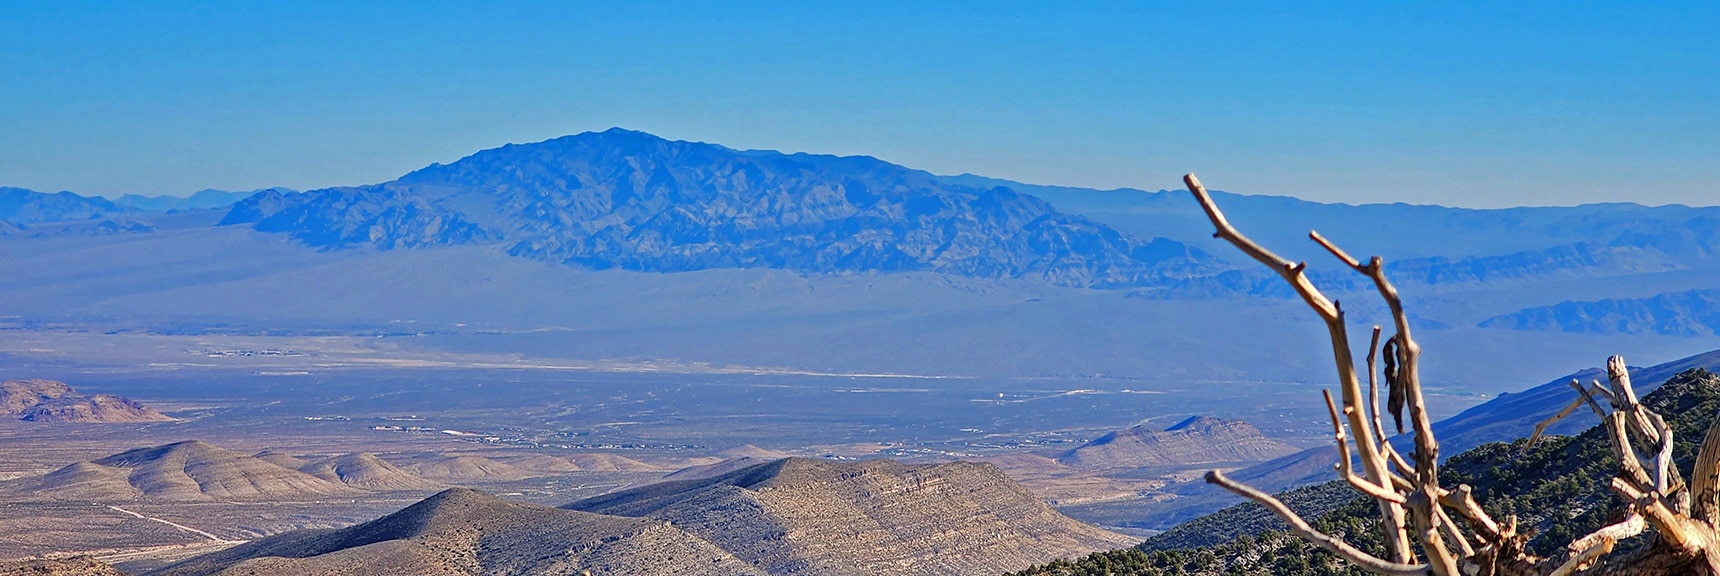 Sheep Range from Near Burnt Peak Summit | Kyle Canyon Grand Crossing | Northern Half | La Madre Mountains Wilderness, Nevada